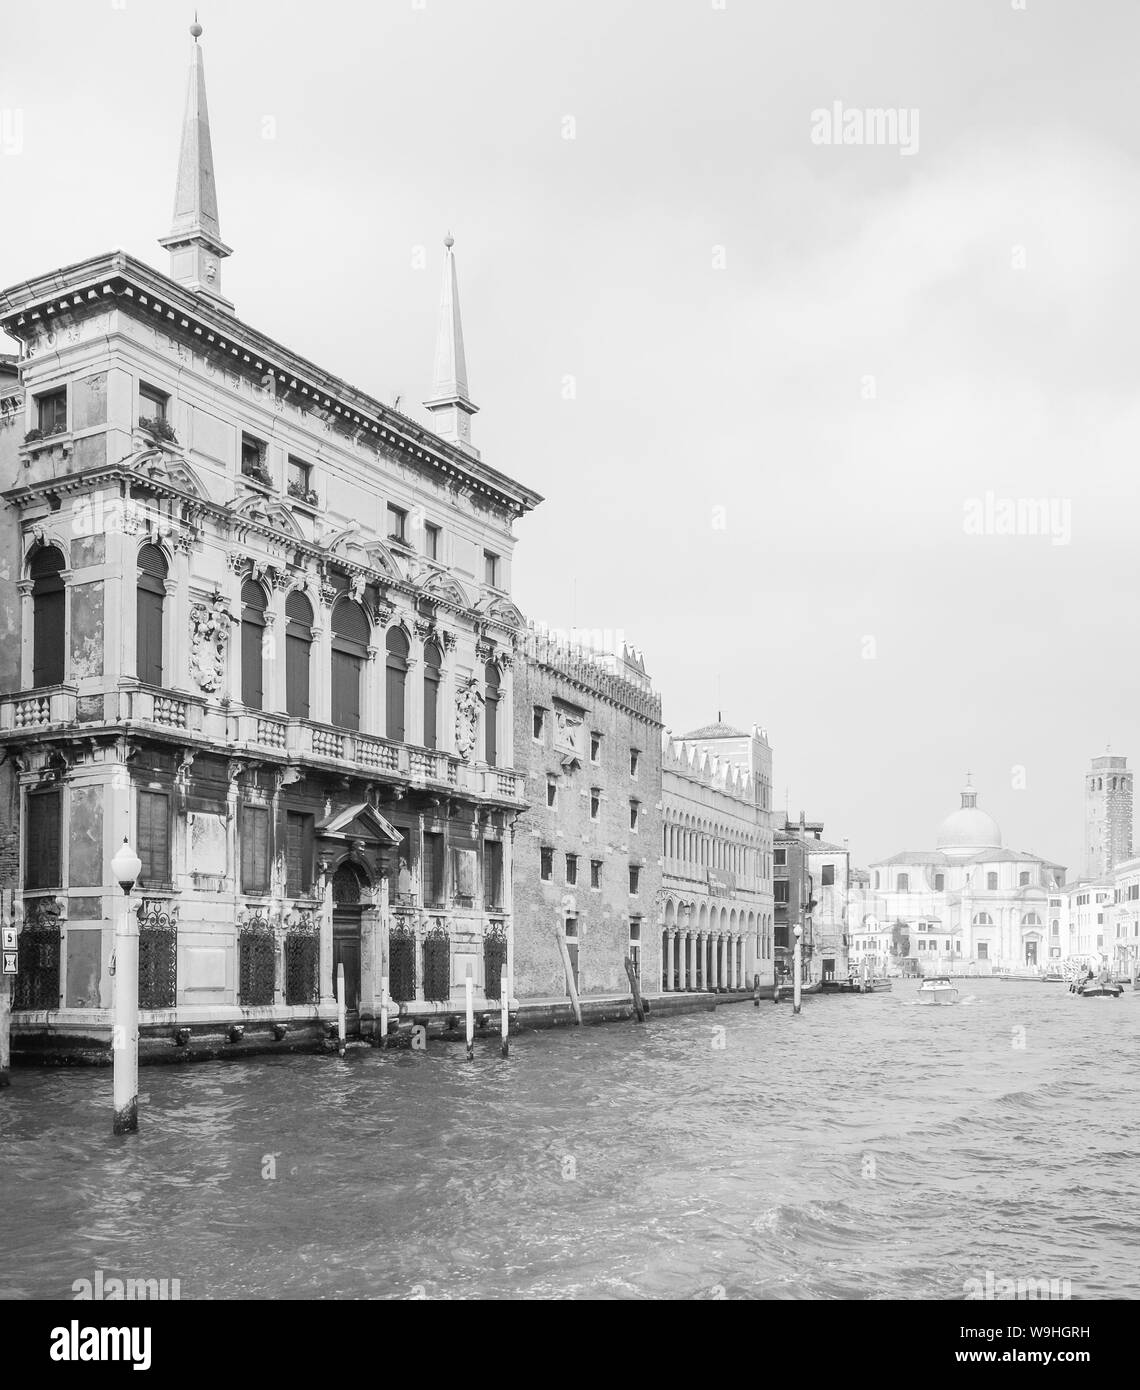 the Palazzo Belloni Battagia on the Grand Canal, Venice Stock Photo